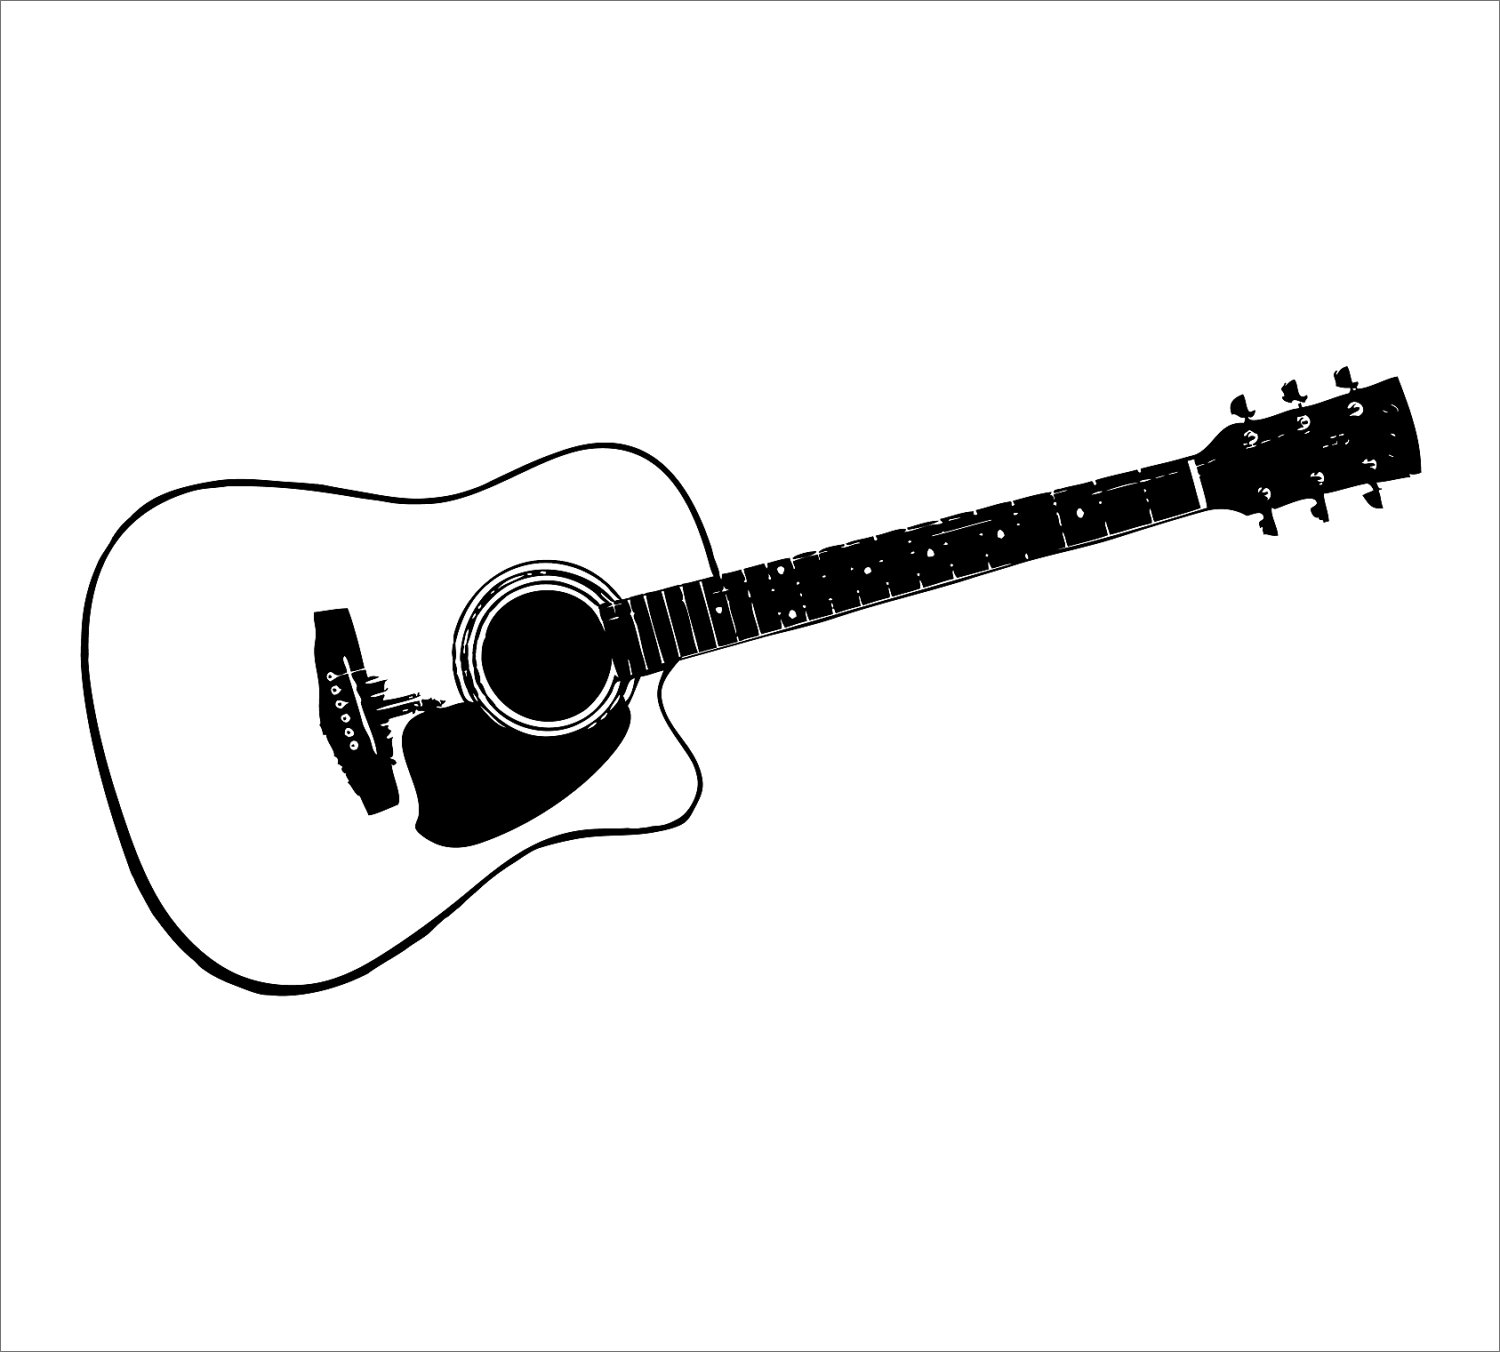 Free acoustic guitar.